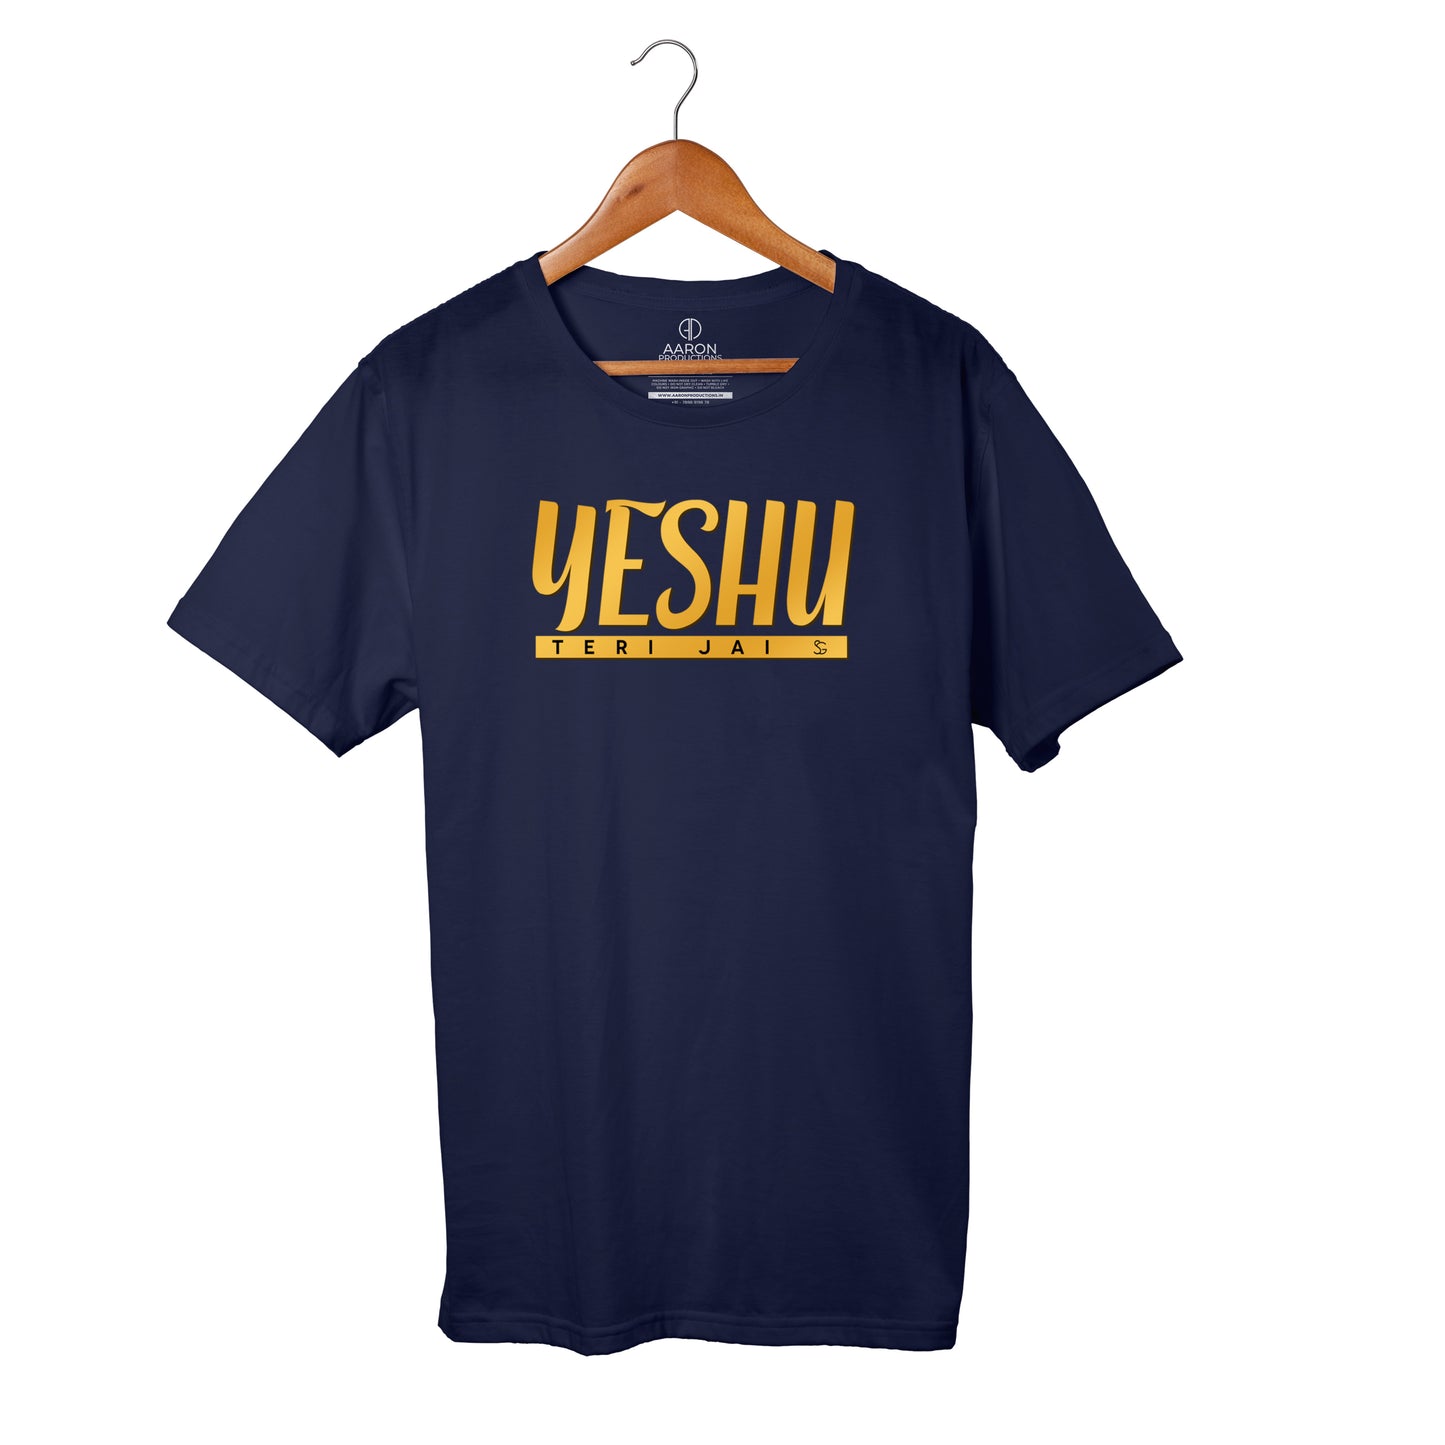 Tshirt - Yeshu Teri Jai